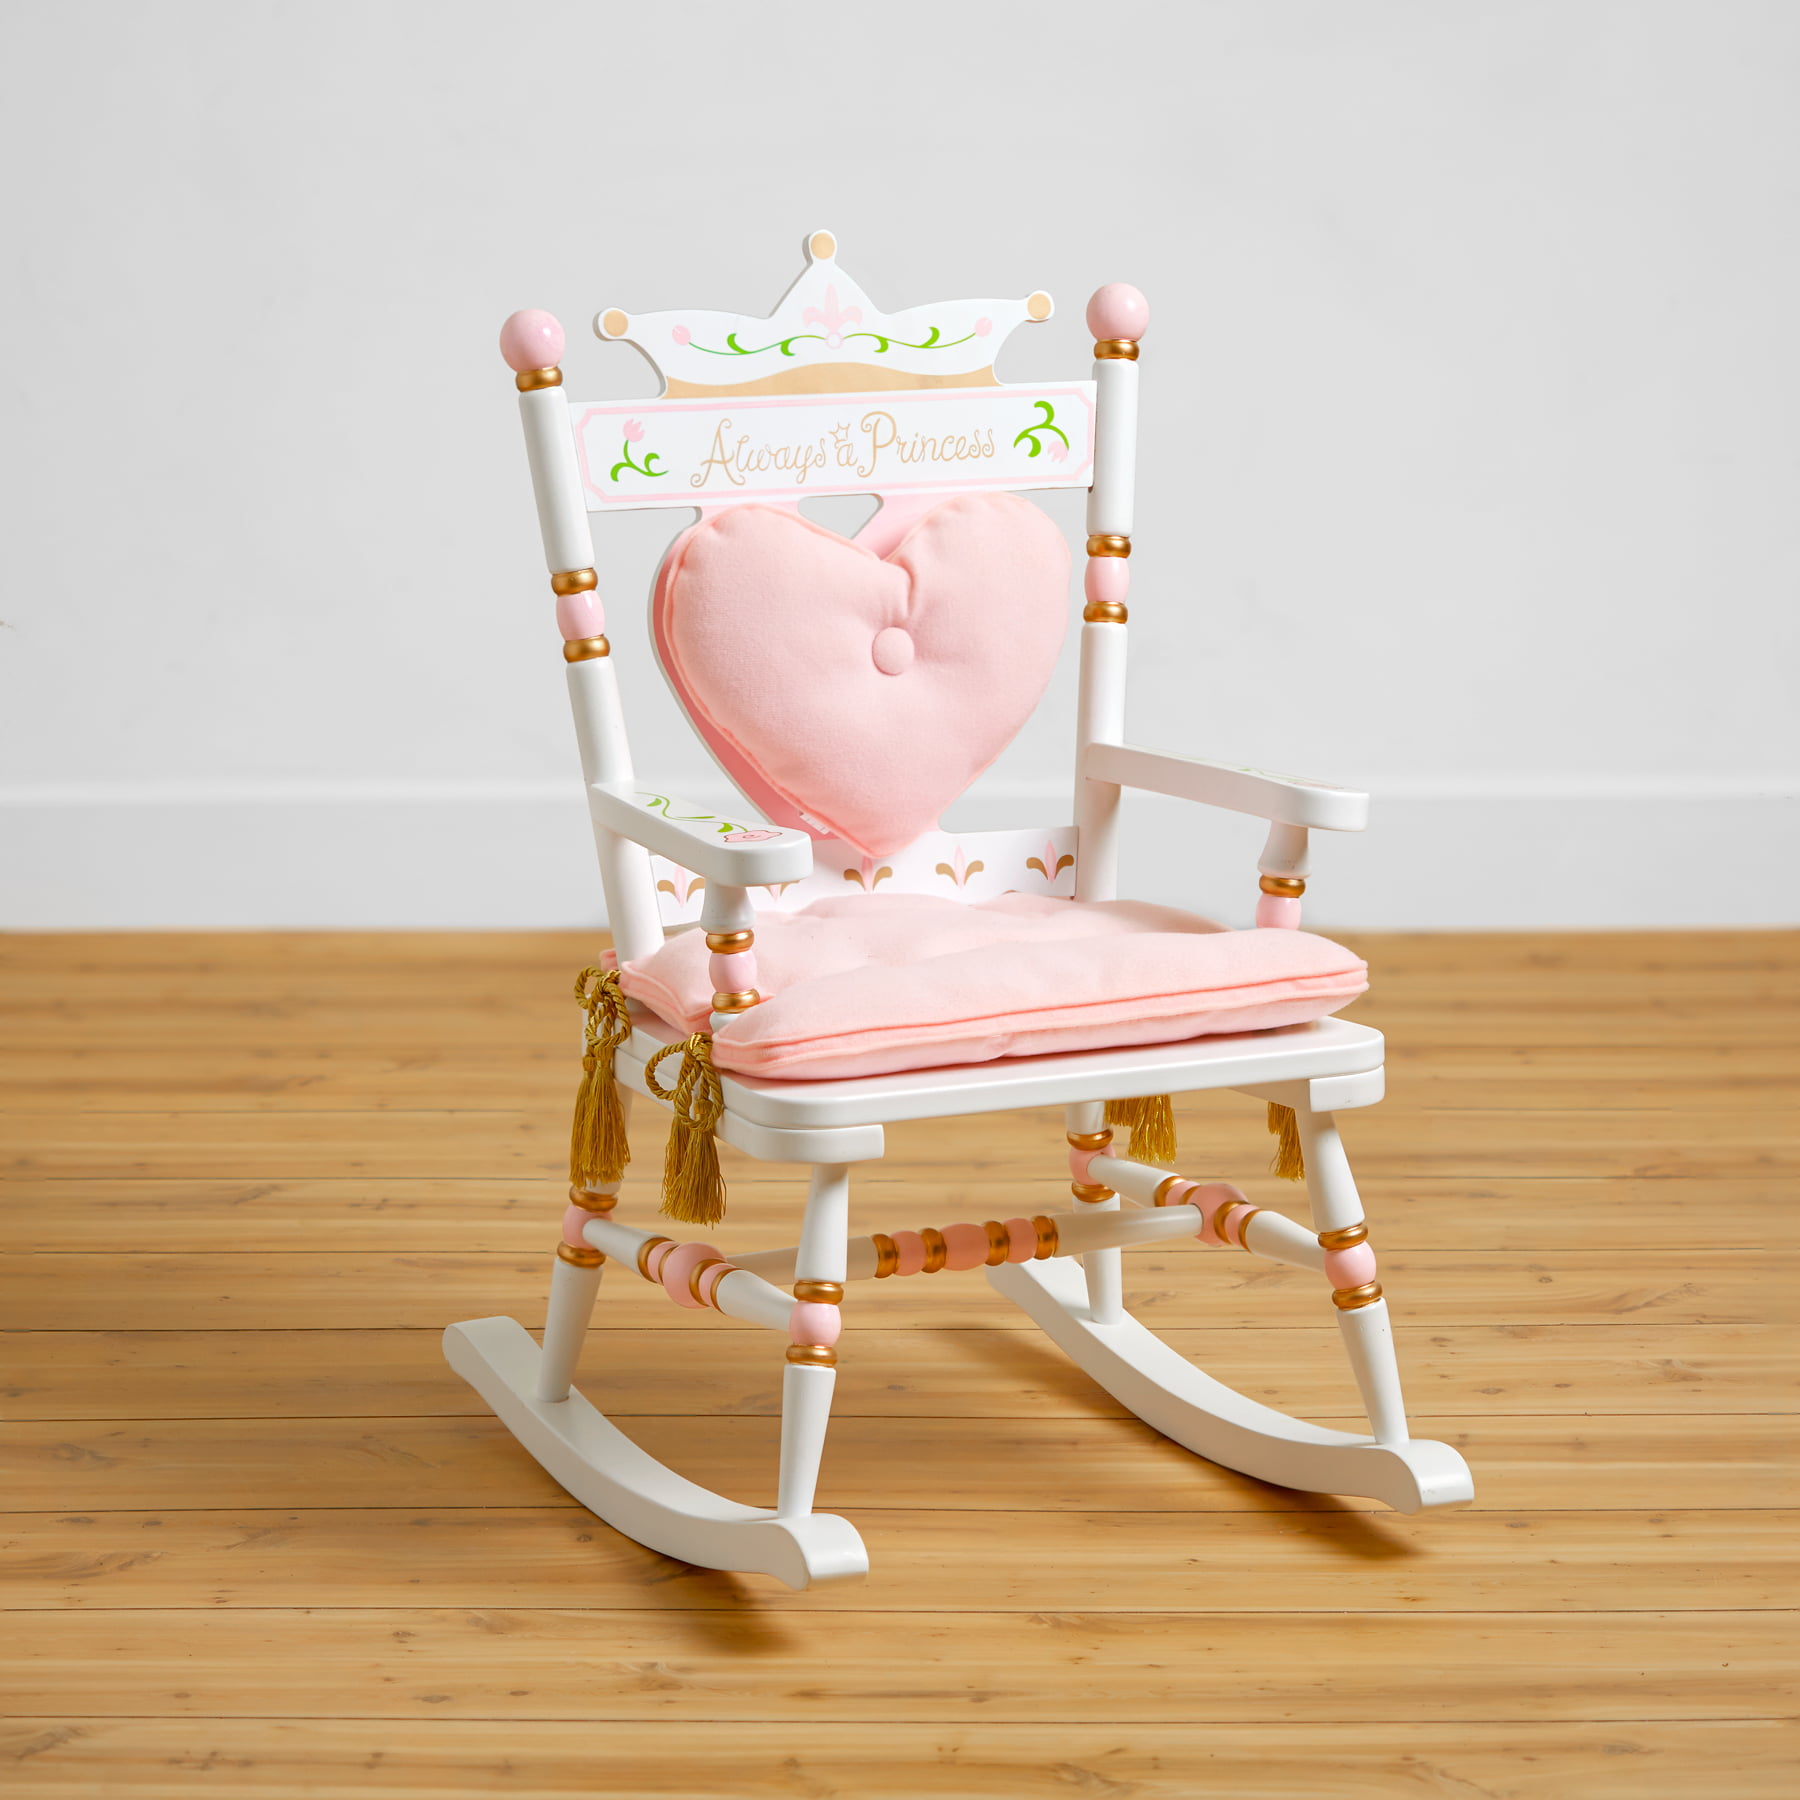 Royal Rocking Chair "Princess" - White - Walmart.com - Walmart.com